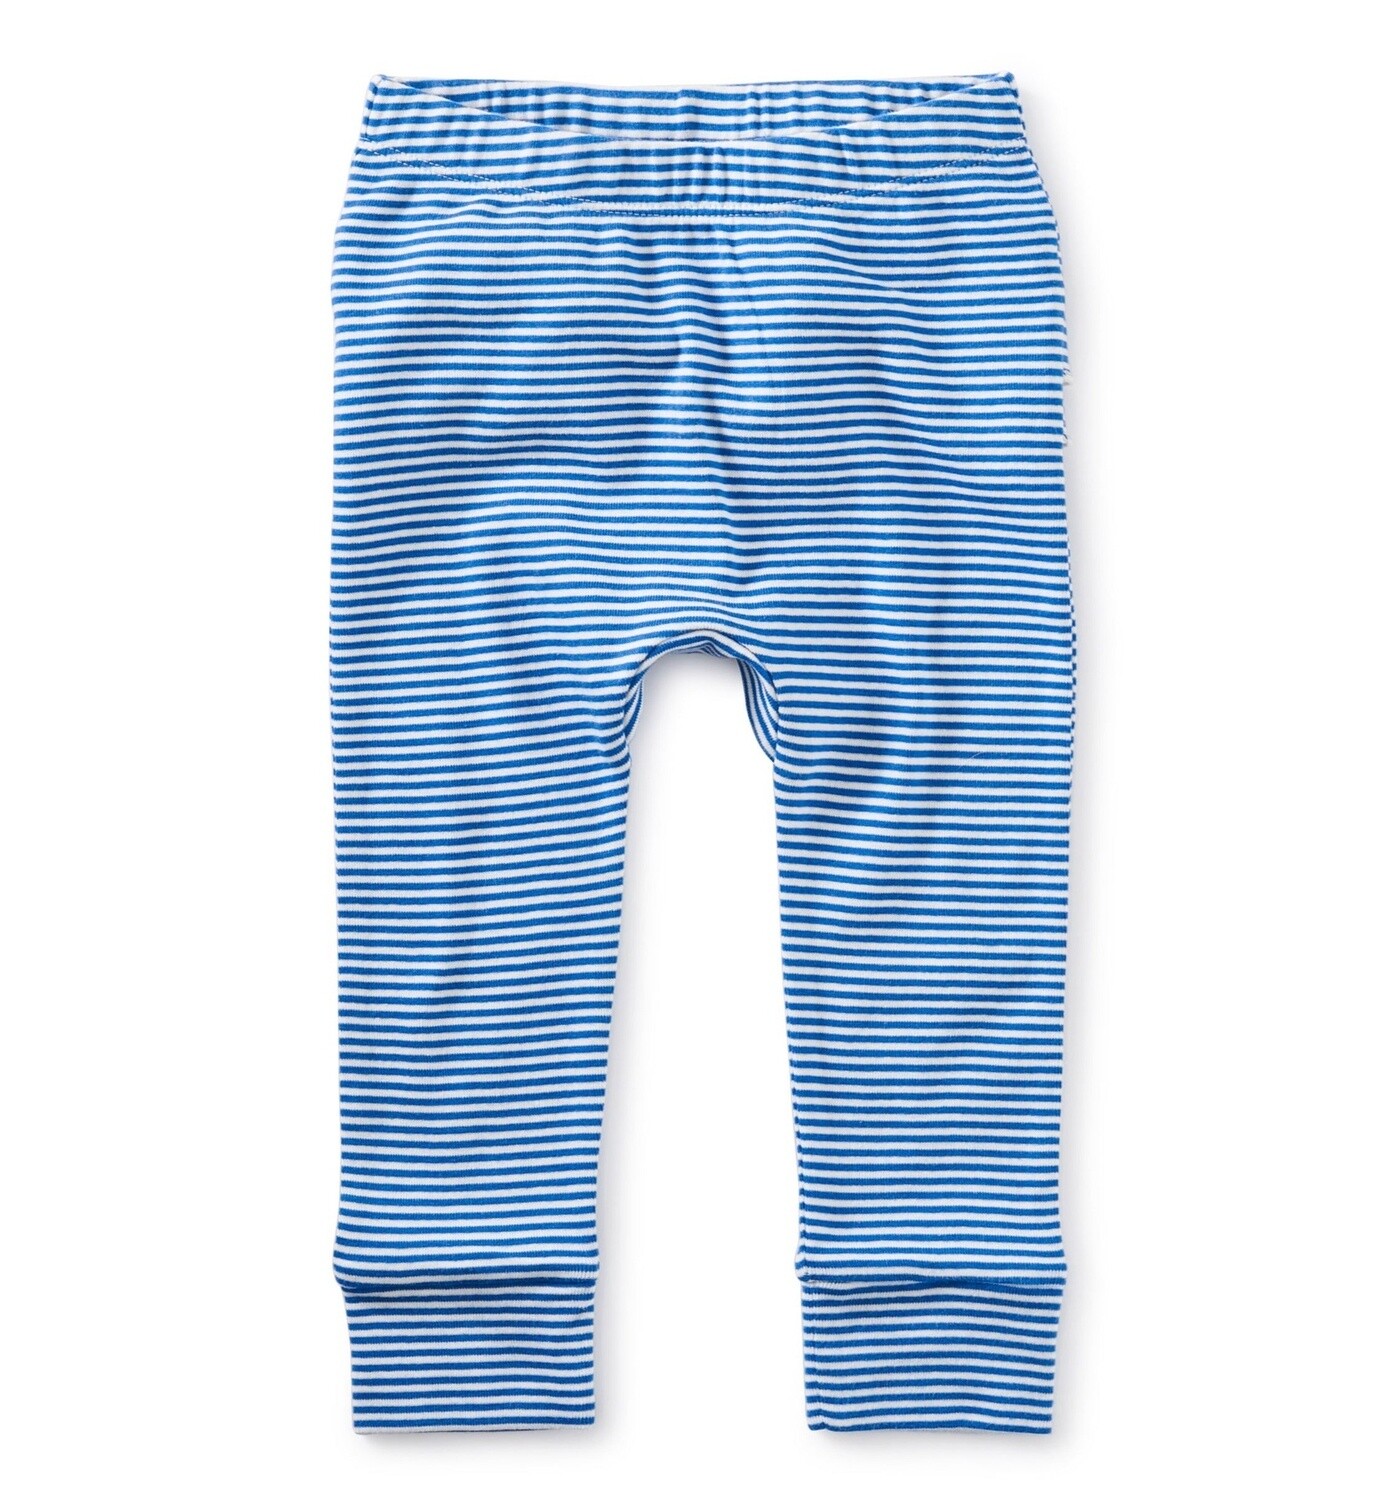 Tea Ruffle Bottom Baby Pants- Imperial Blue